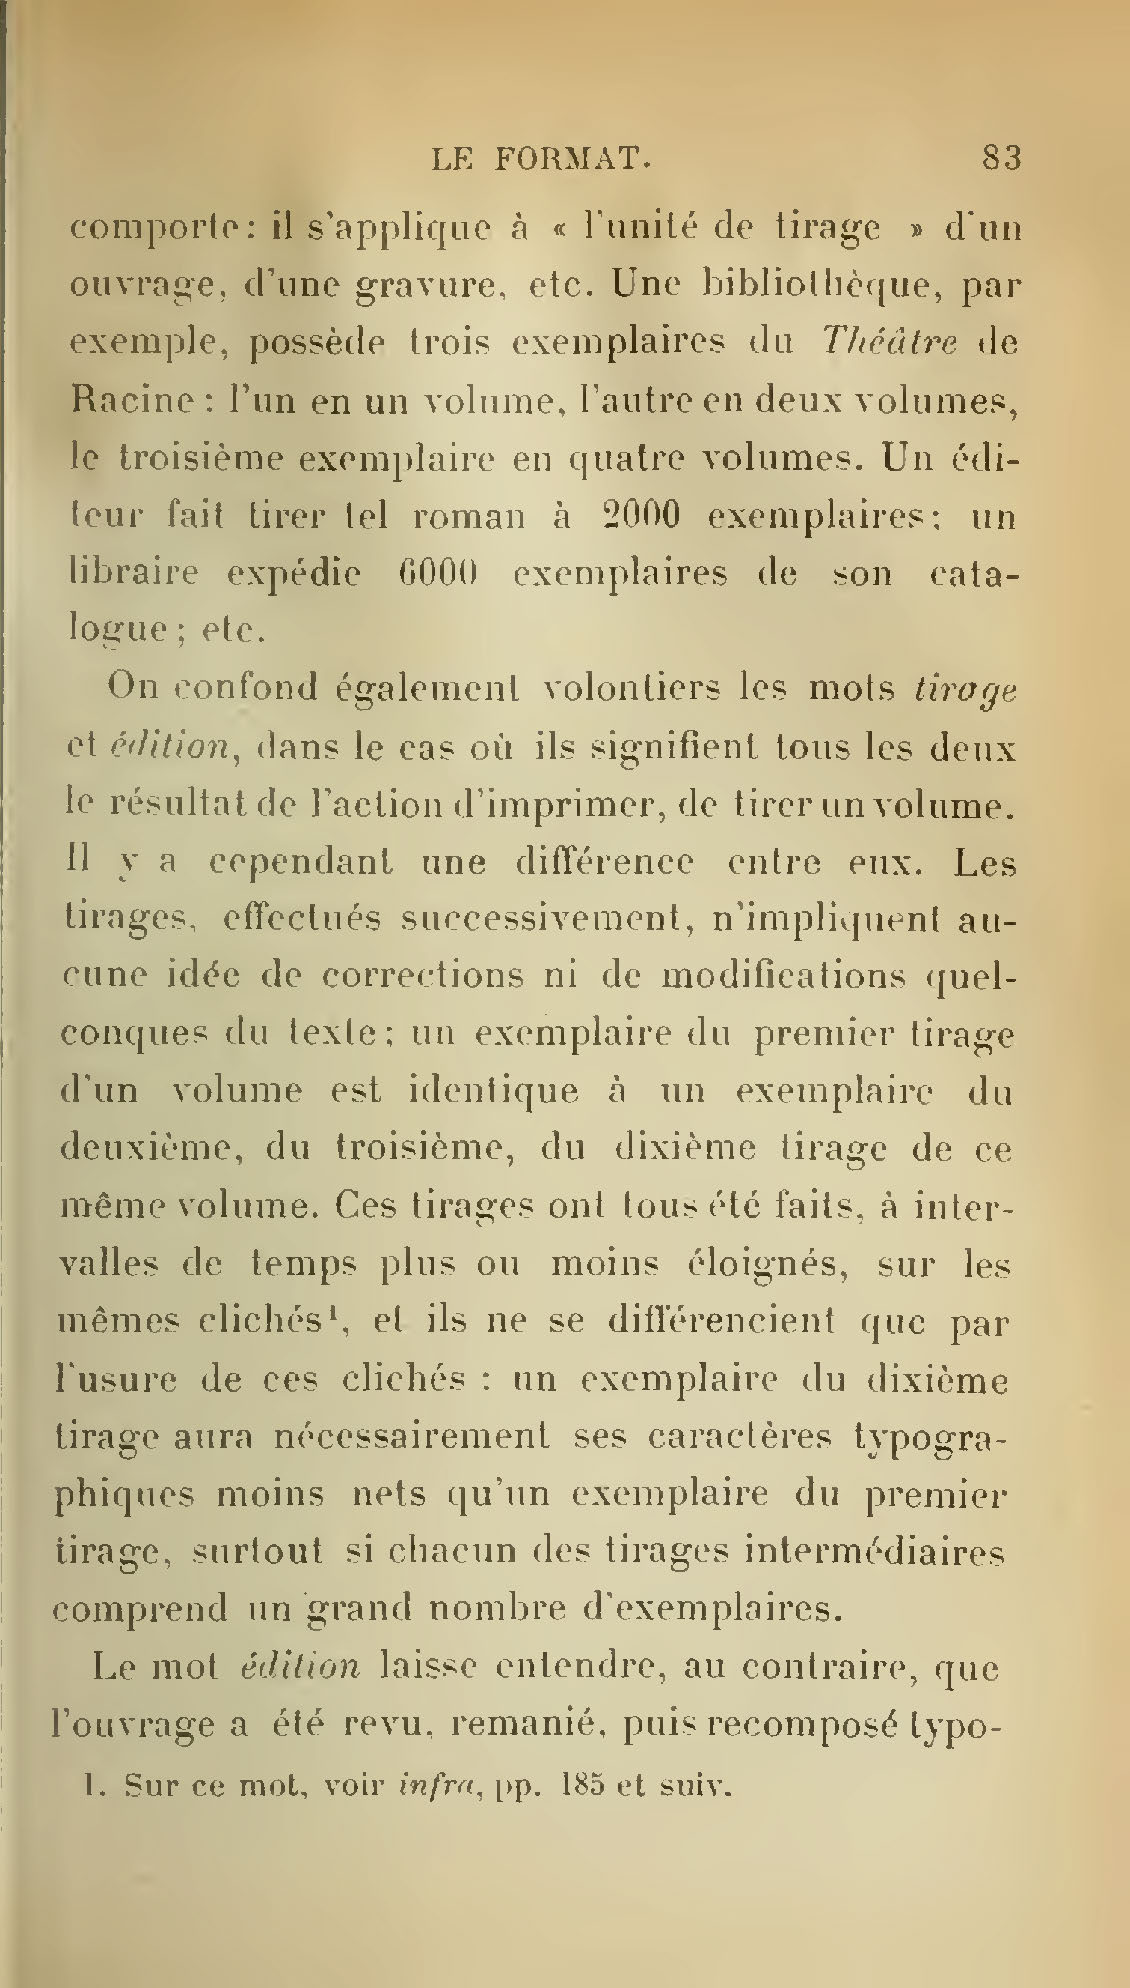 Albert Cim, Le Livre, t. III, p. 83.